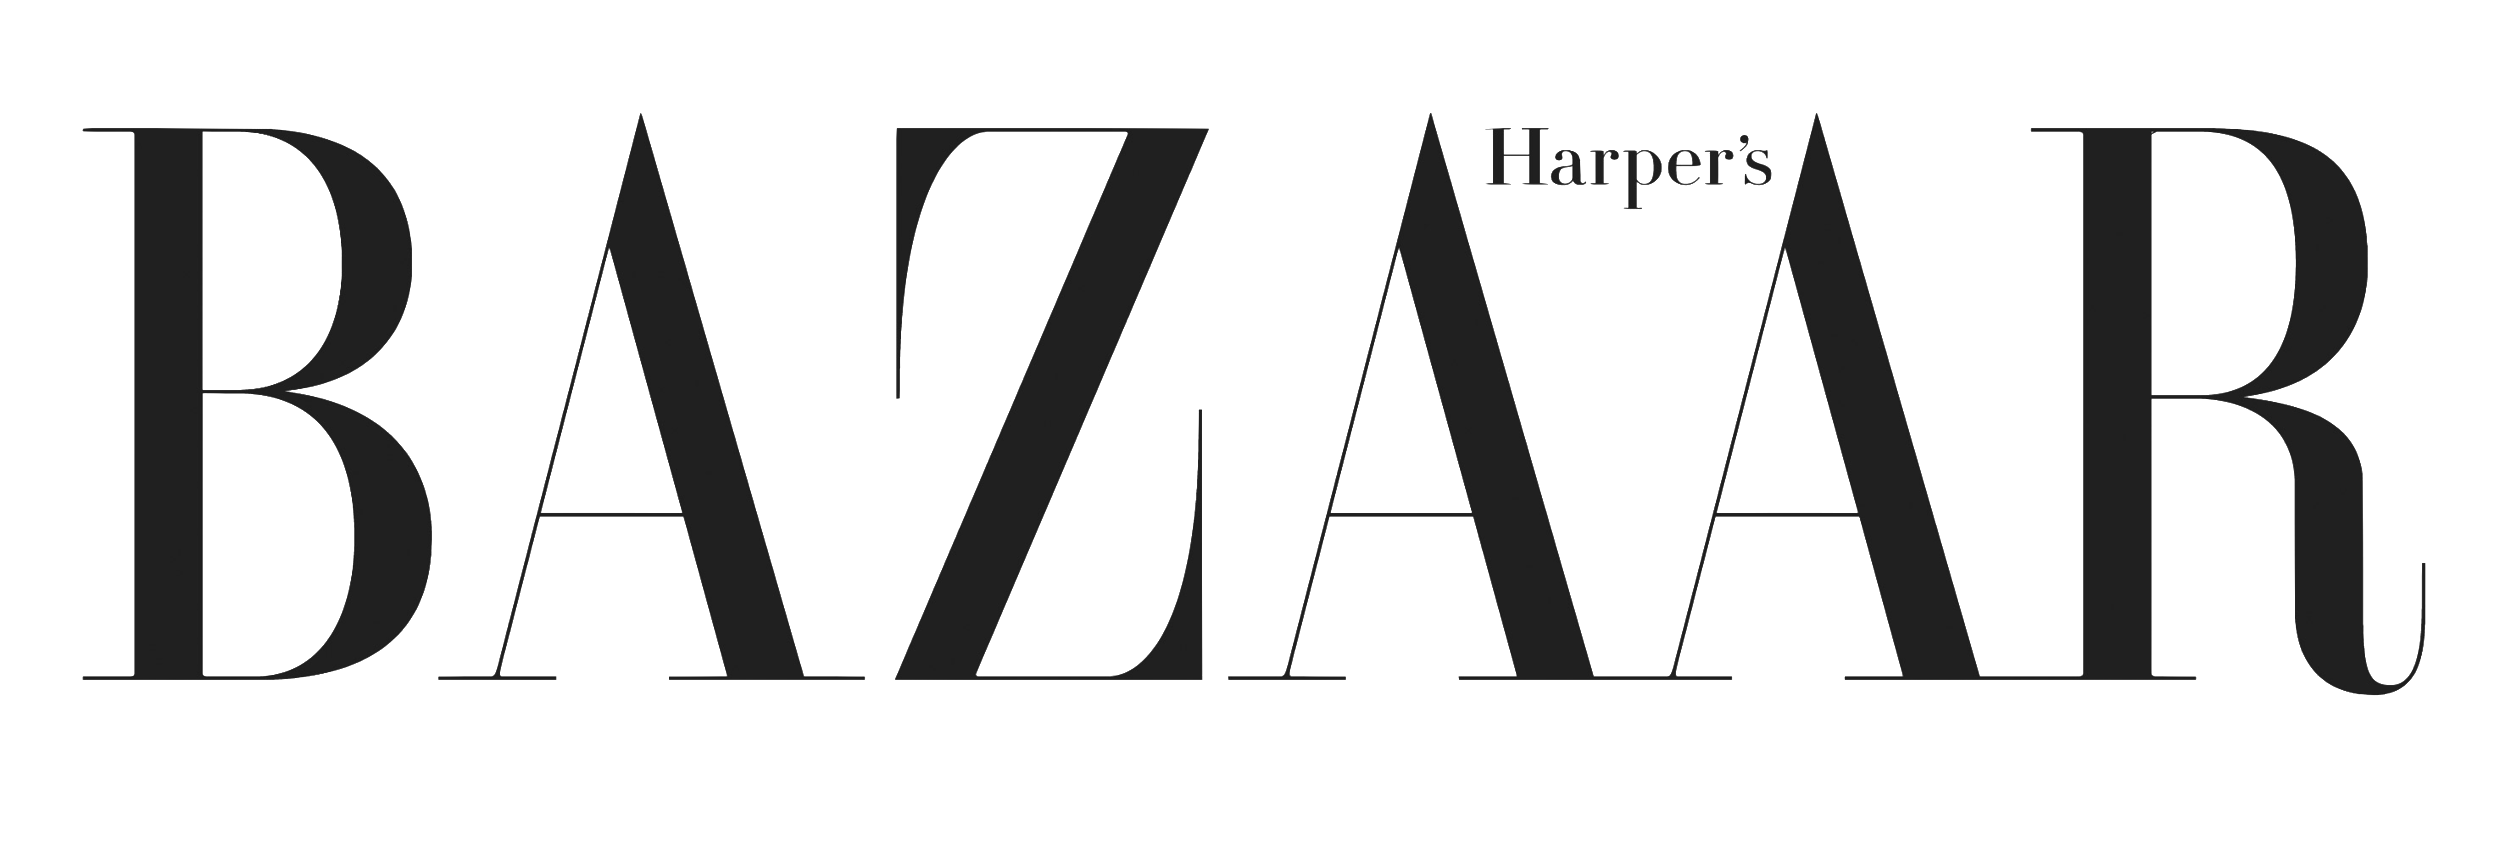 Harper's Bazaar Logo No BG.png